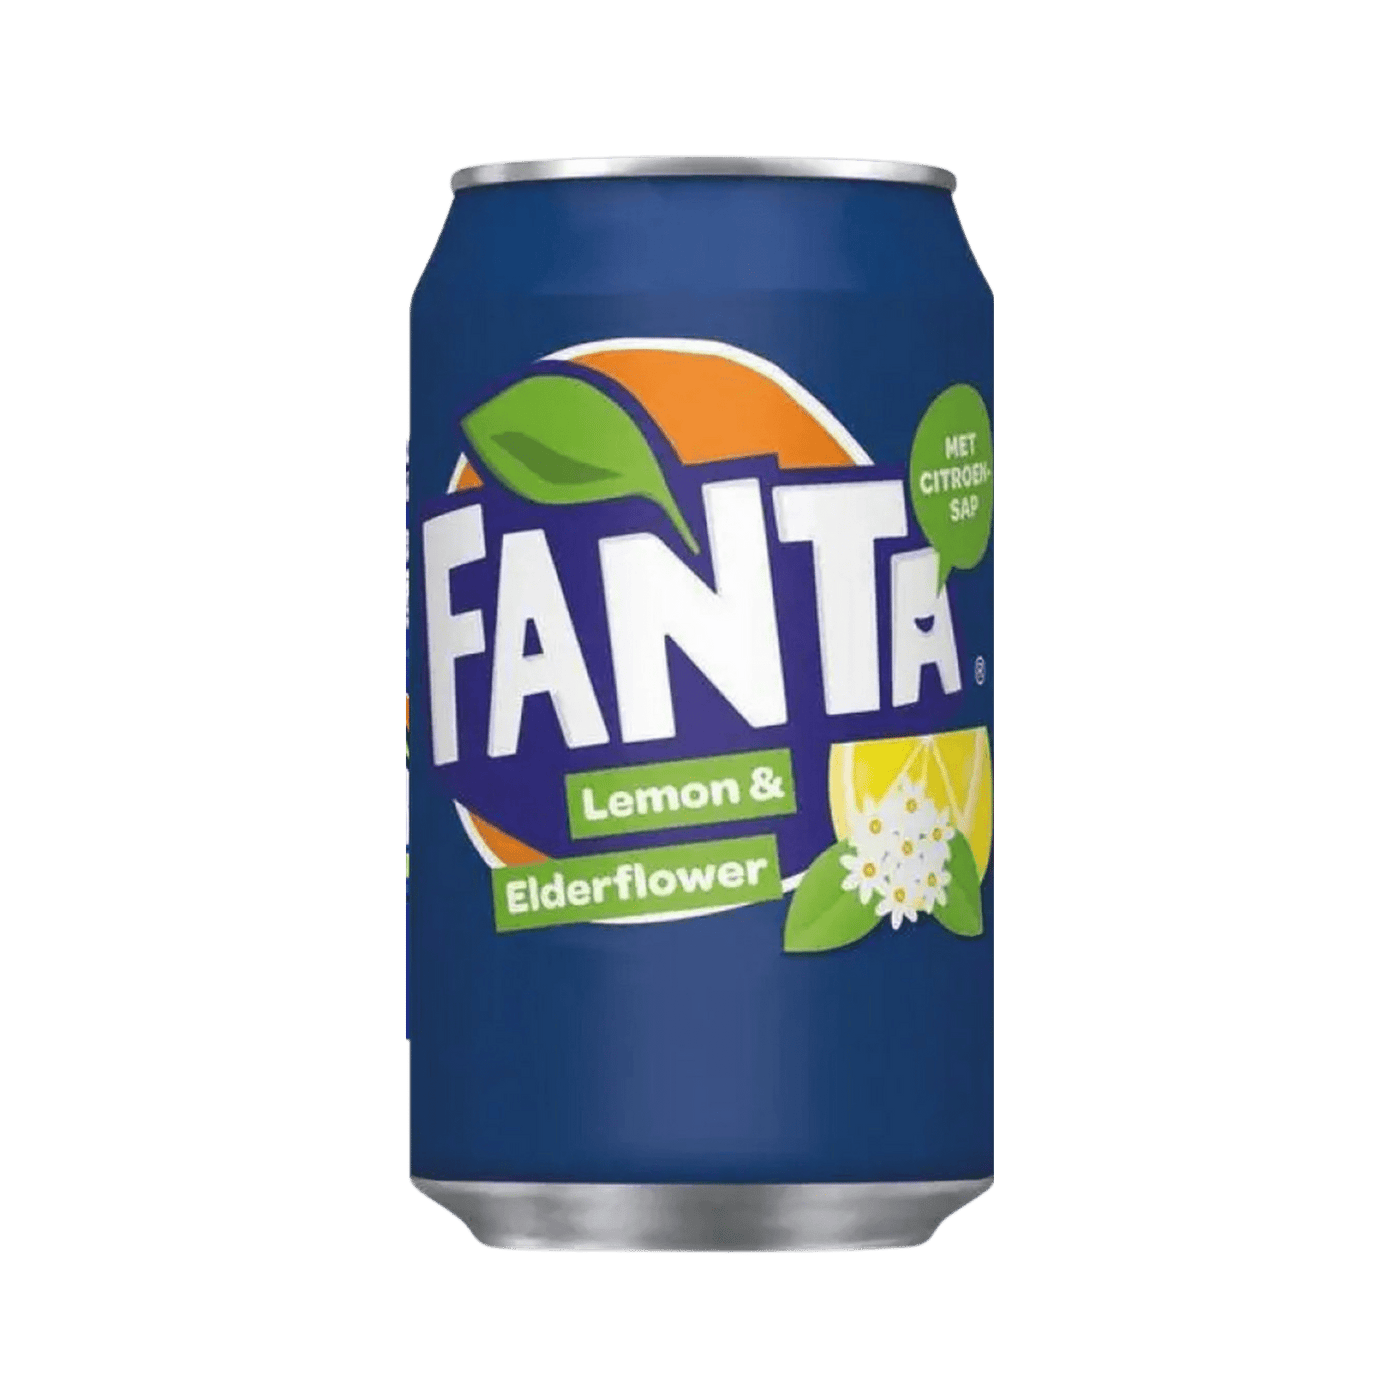 Fanta - Europe